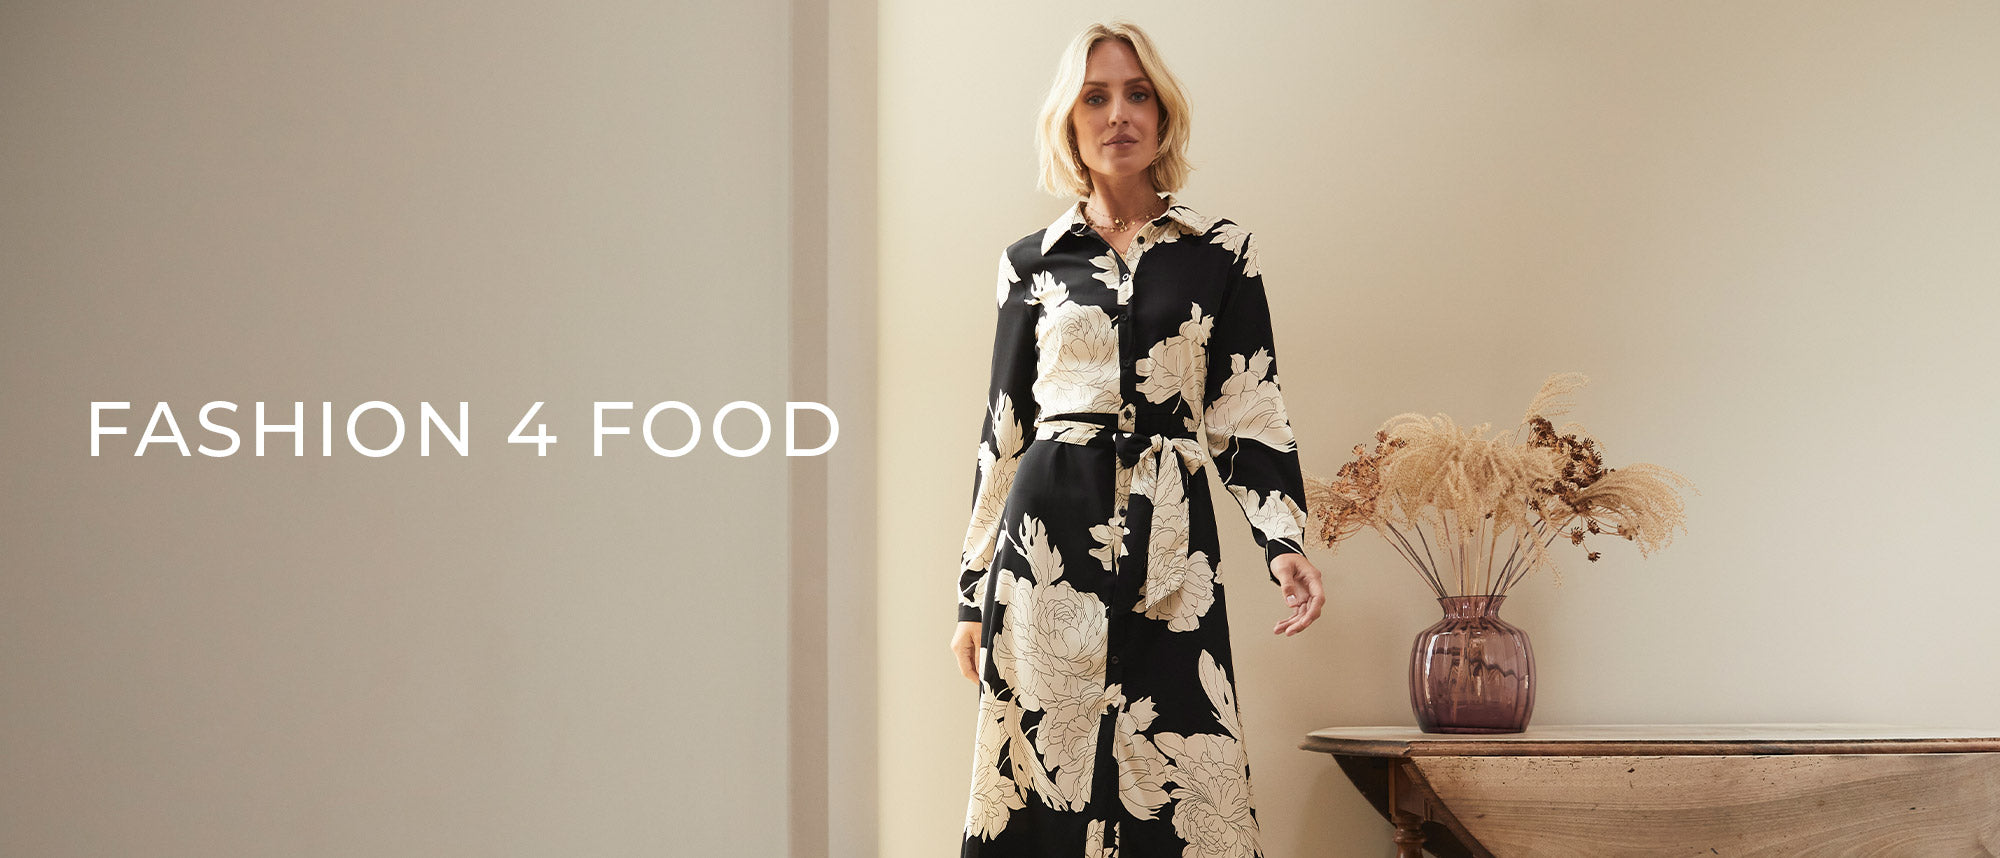 Izabel London Fashion 4 Food Program